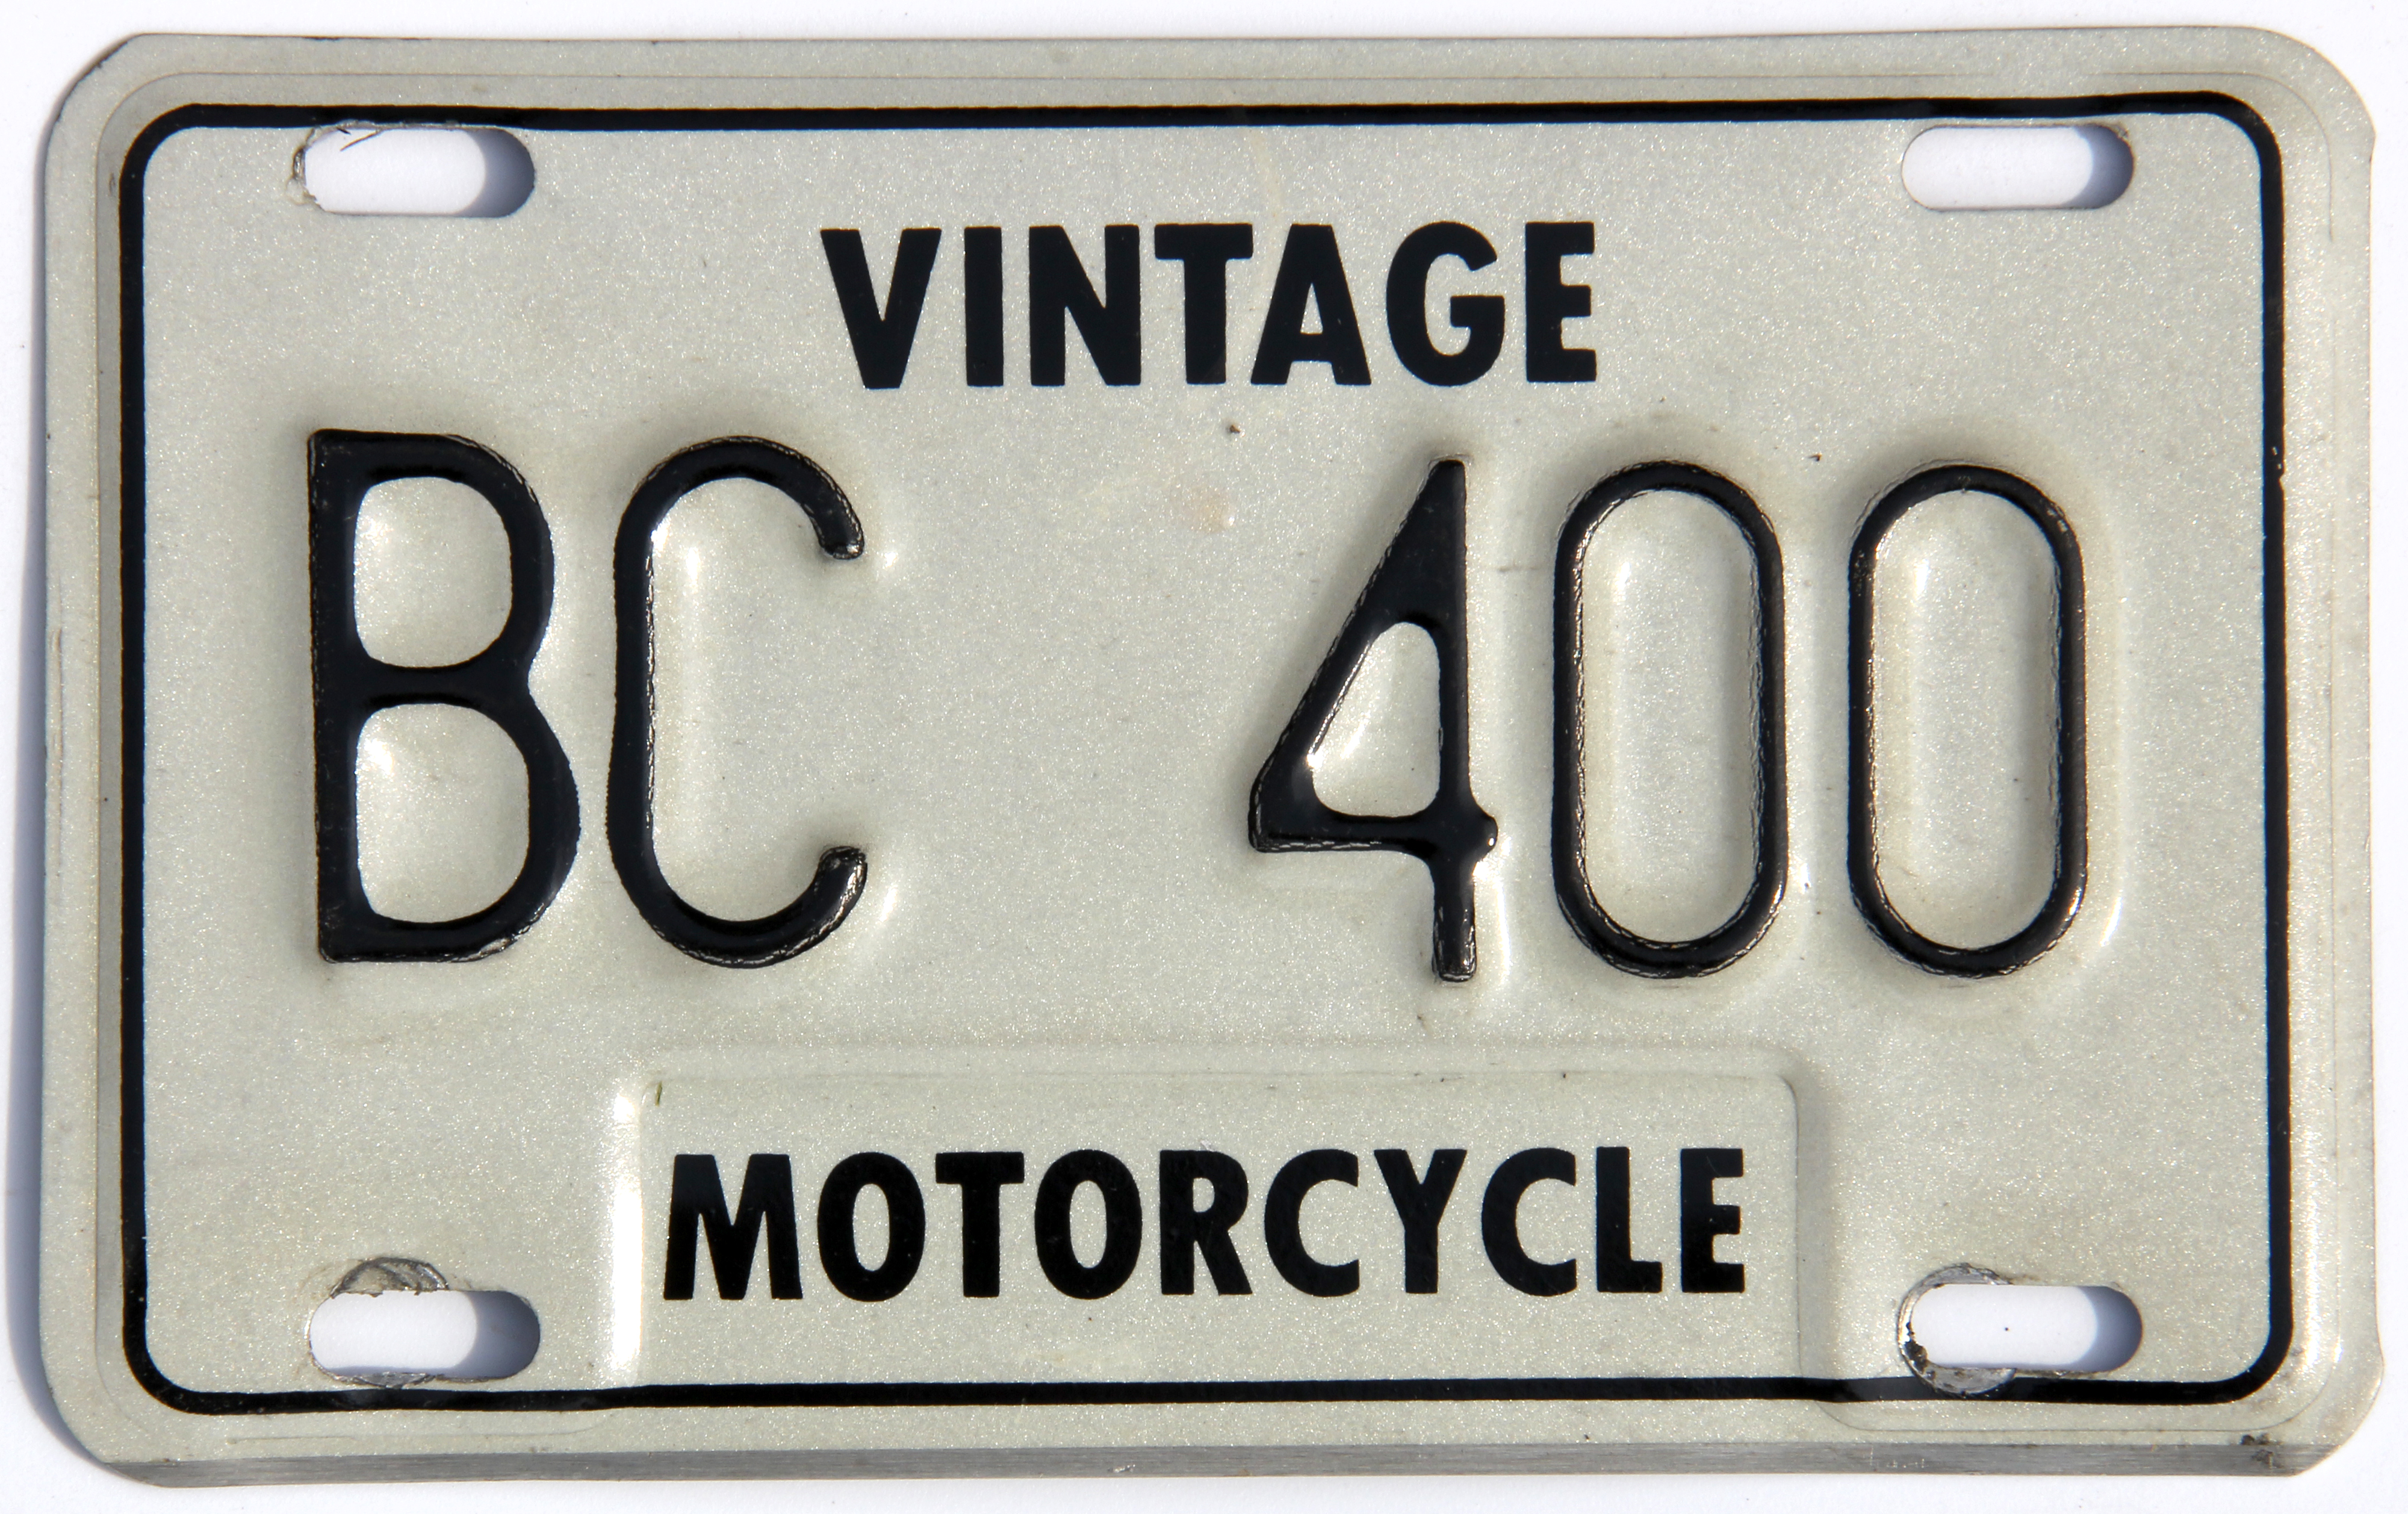 Vintage Motorcycle License Plates 53